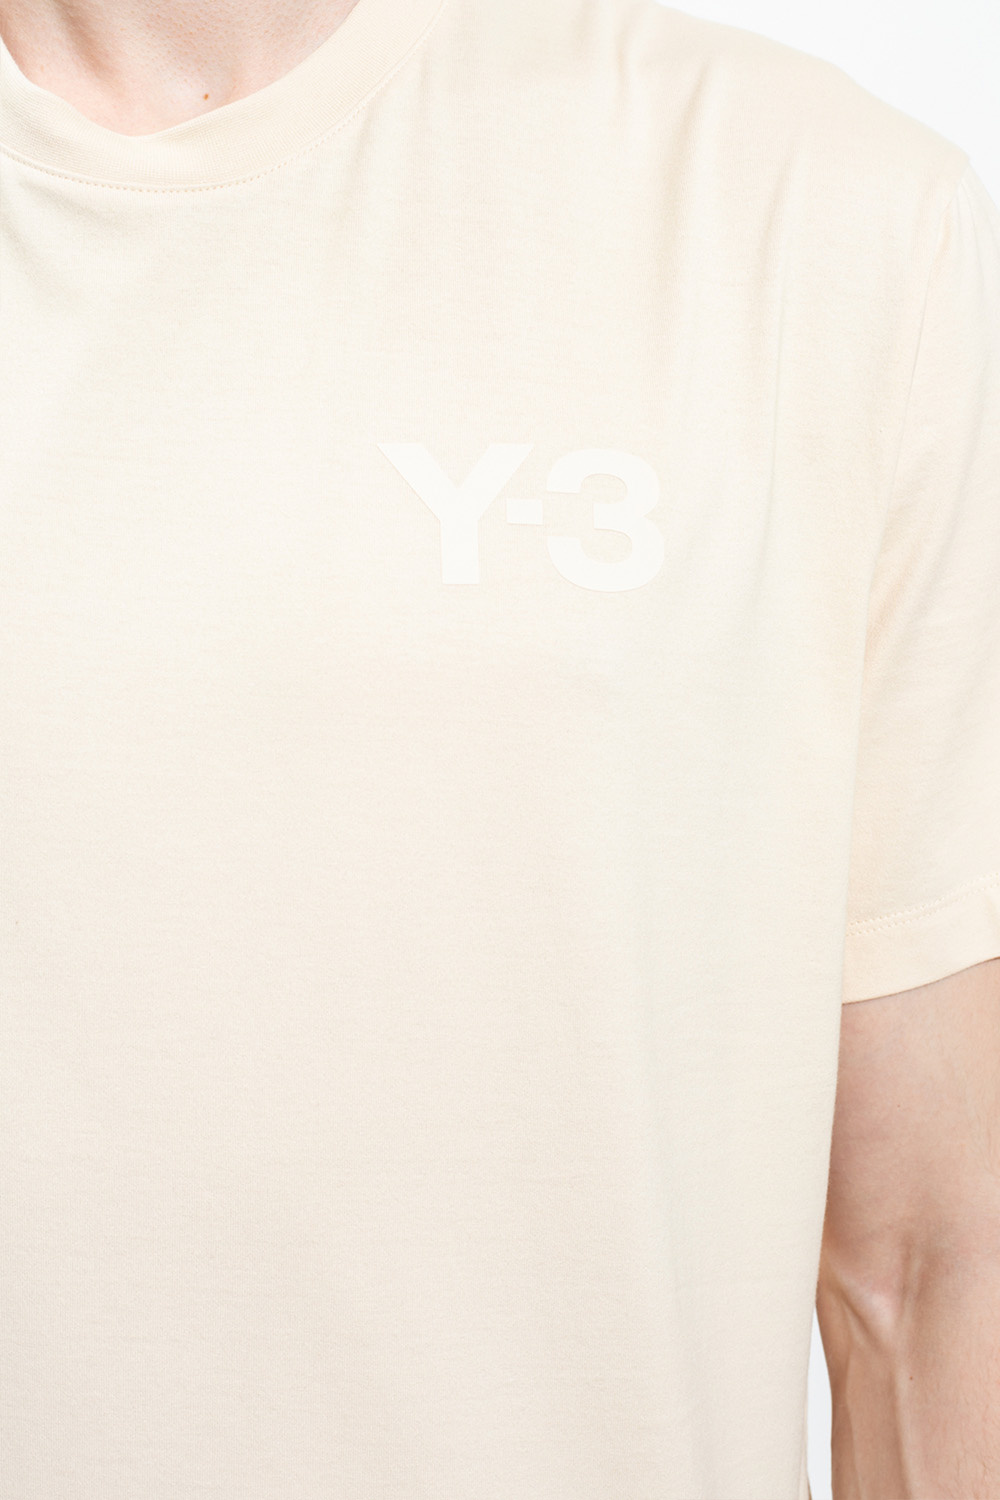 Y-3 Yohji Yamamoto Nike Sportswear dresses two of their most popular silhouettes